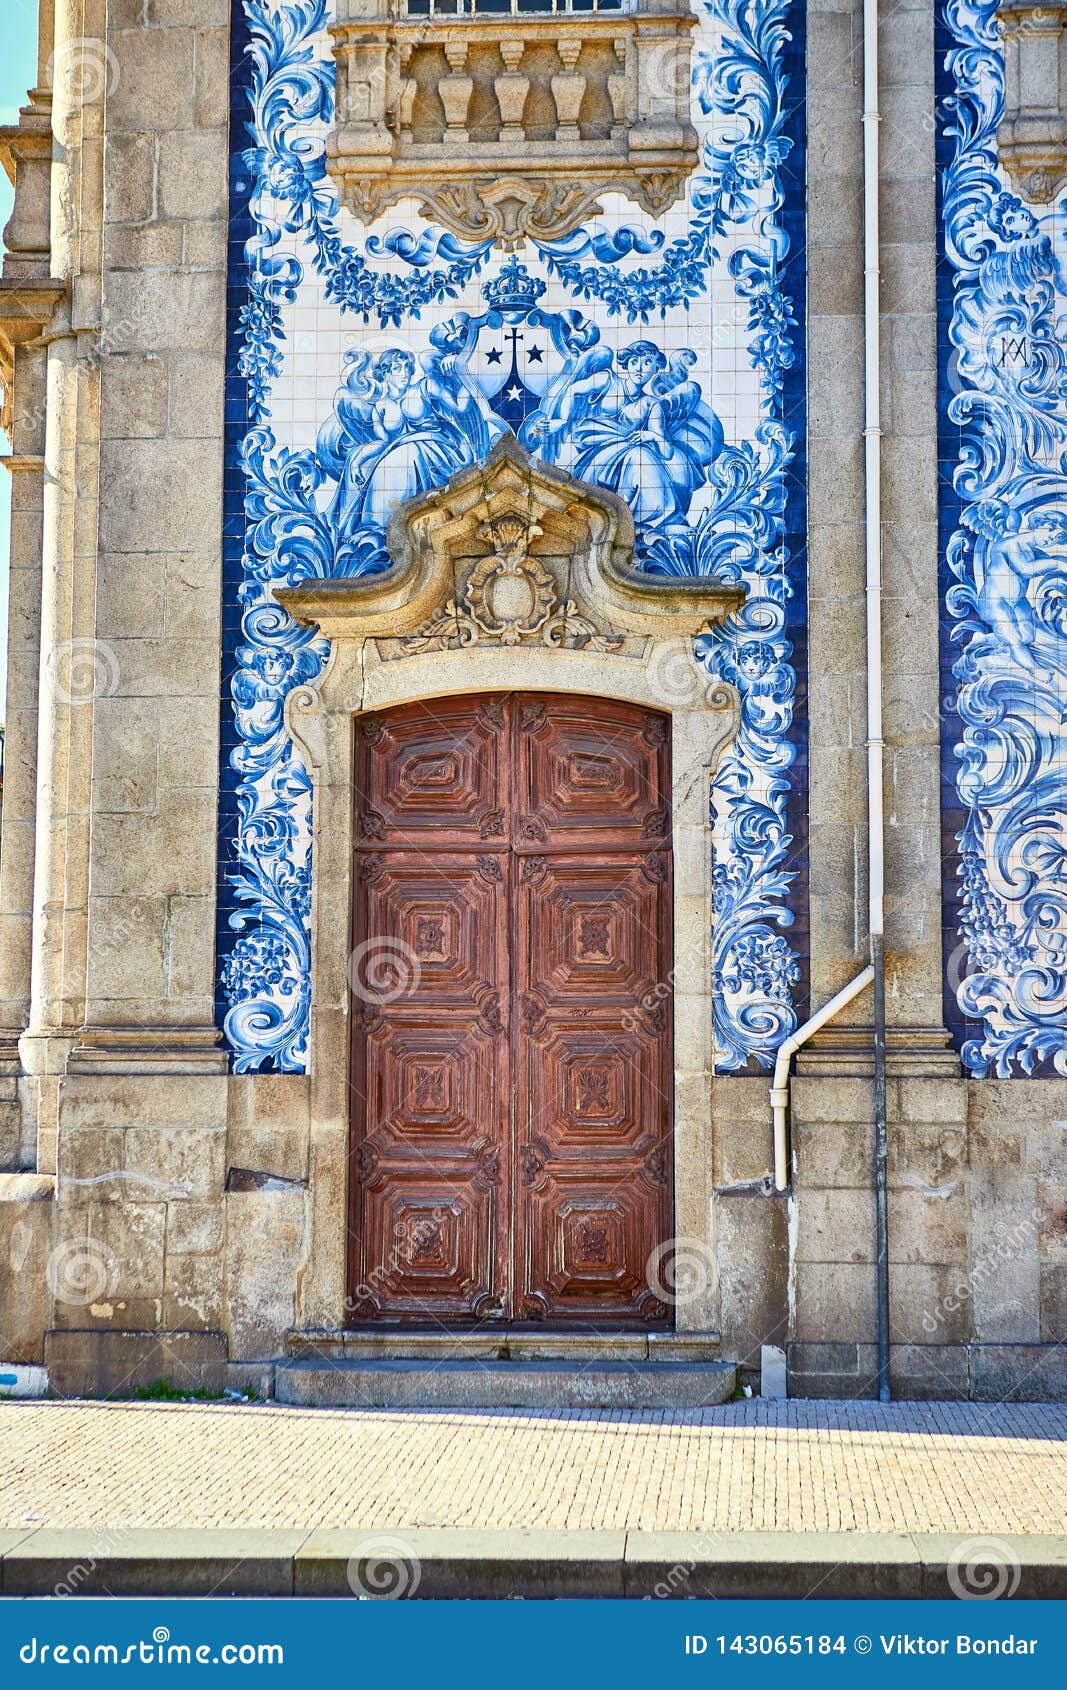 beautiful facade of a historic building carmelite church igreja dos carmelitas descalcos in porto with azulejo tiles. portugal